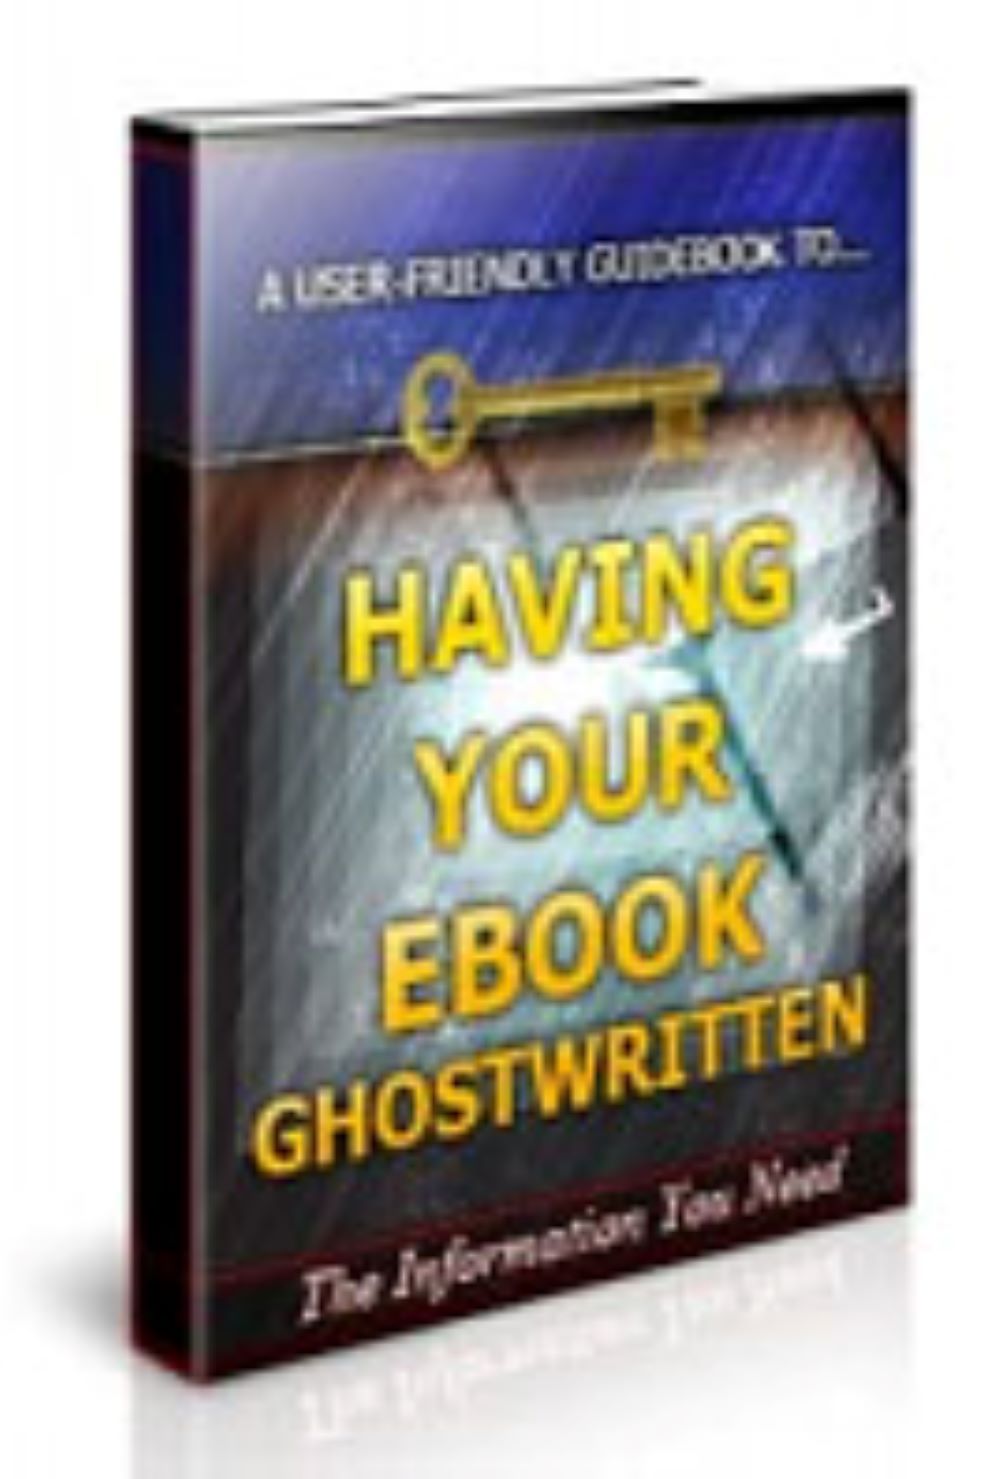 Having Your Ebook Ghostwritten